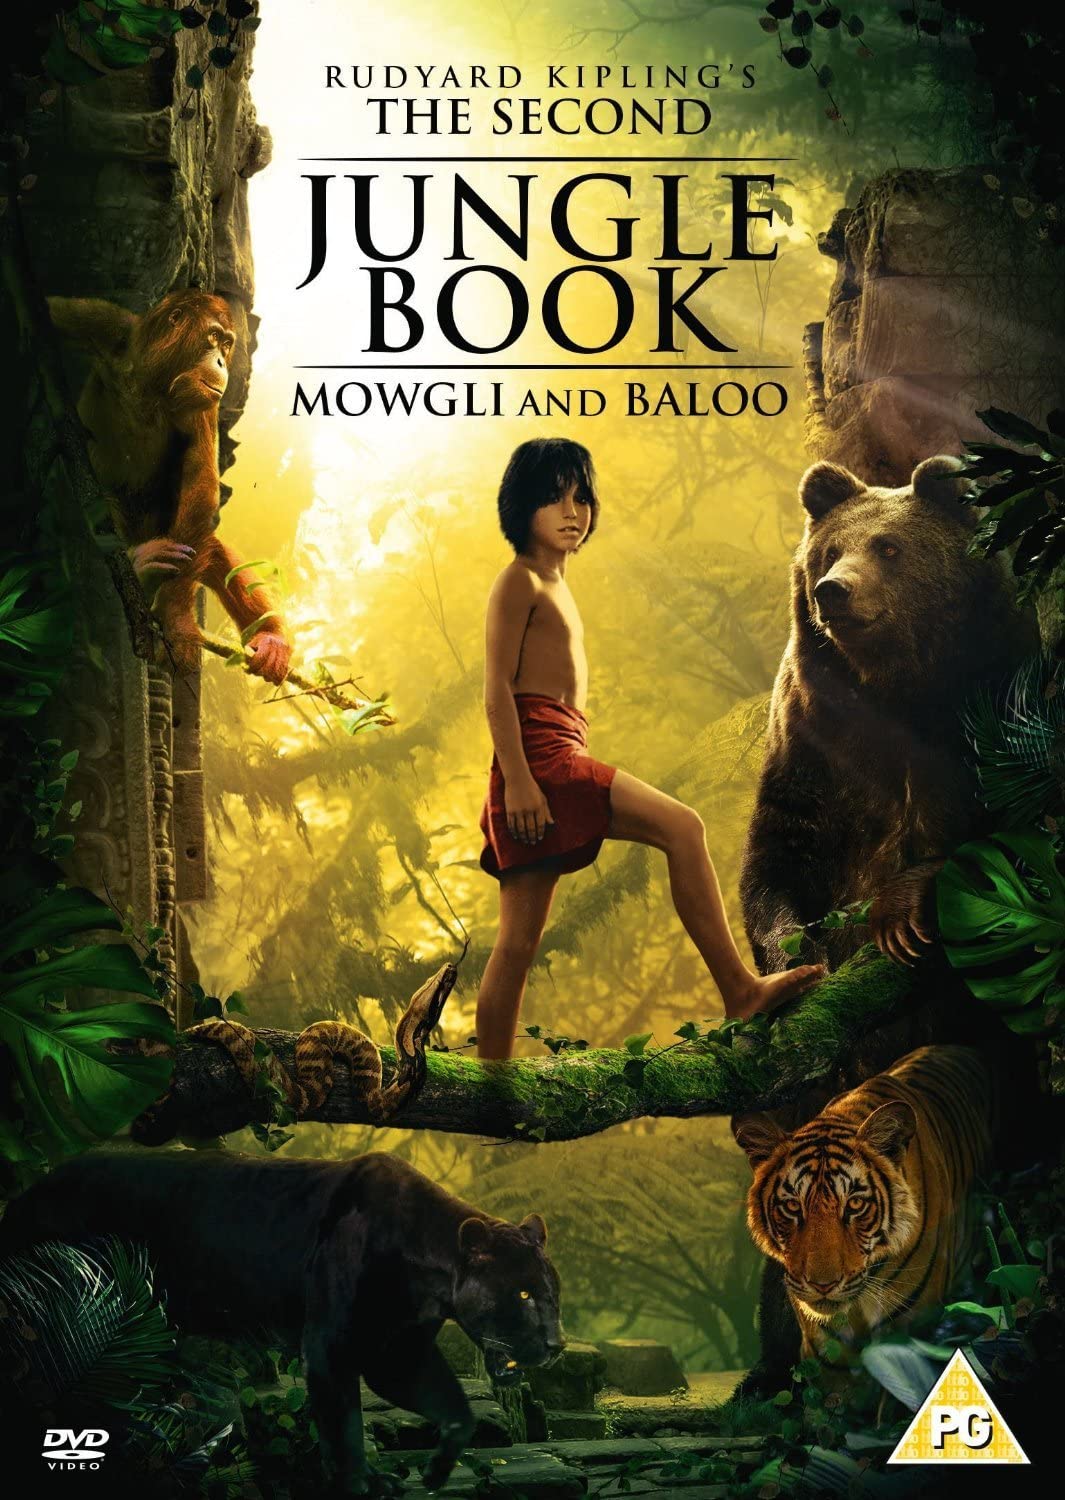 Rudyard Kipling's The Second Jungle Book - Mowgli And Baloo - Family/Adventure [DVD]